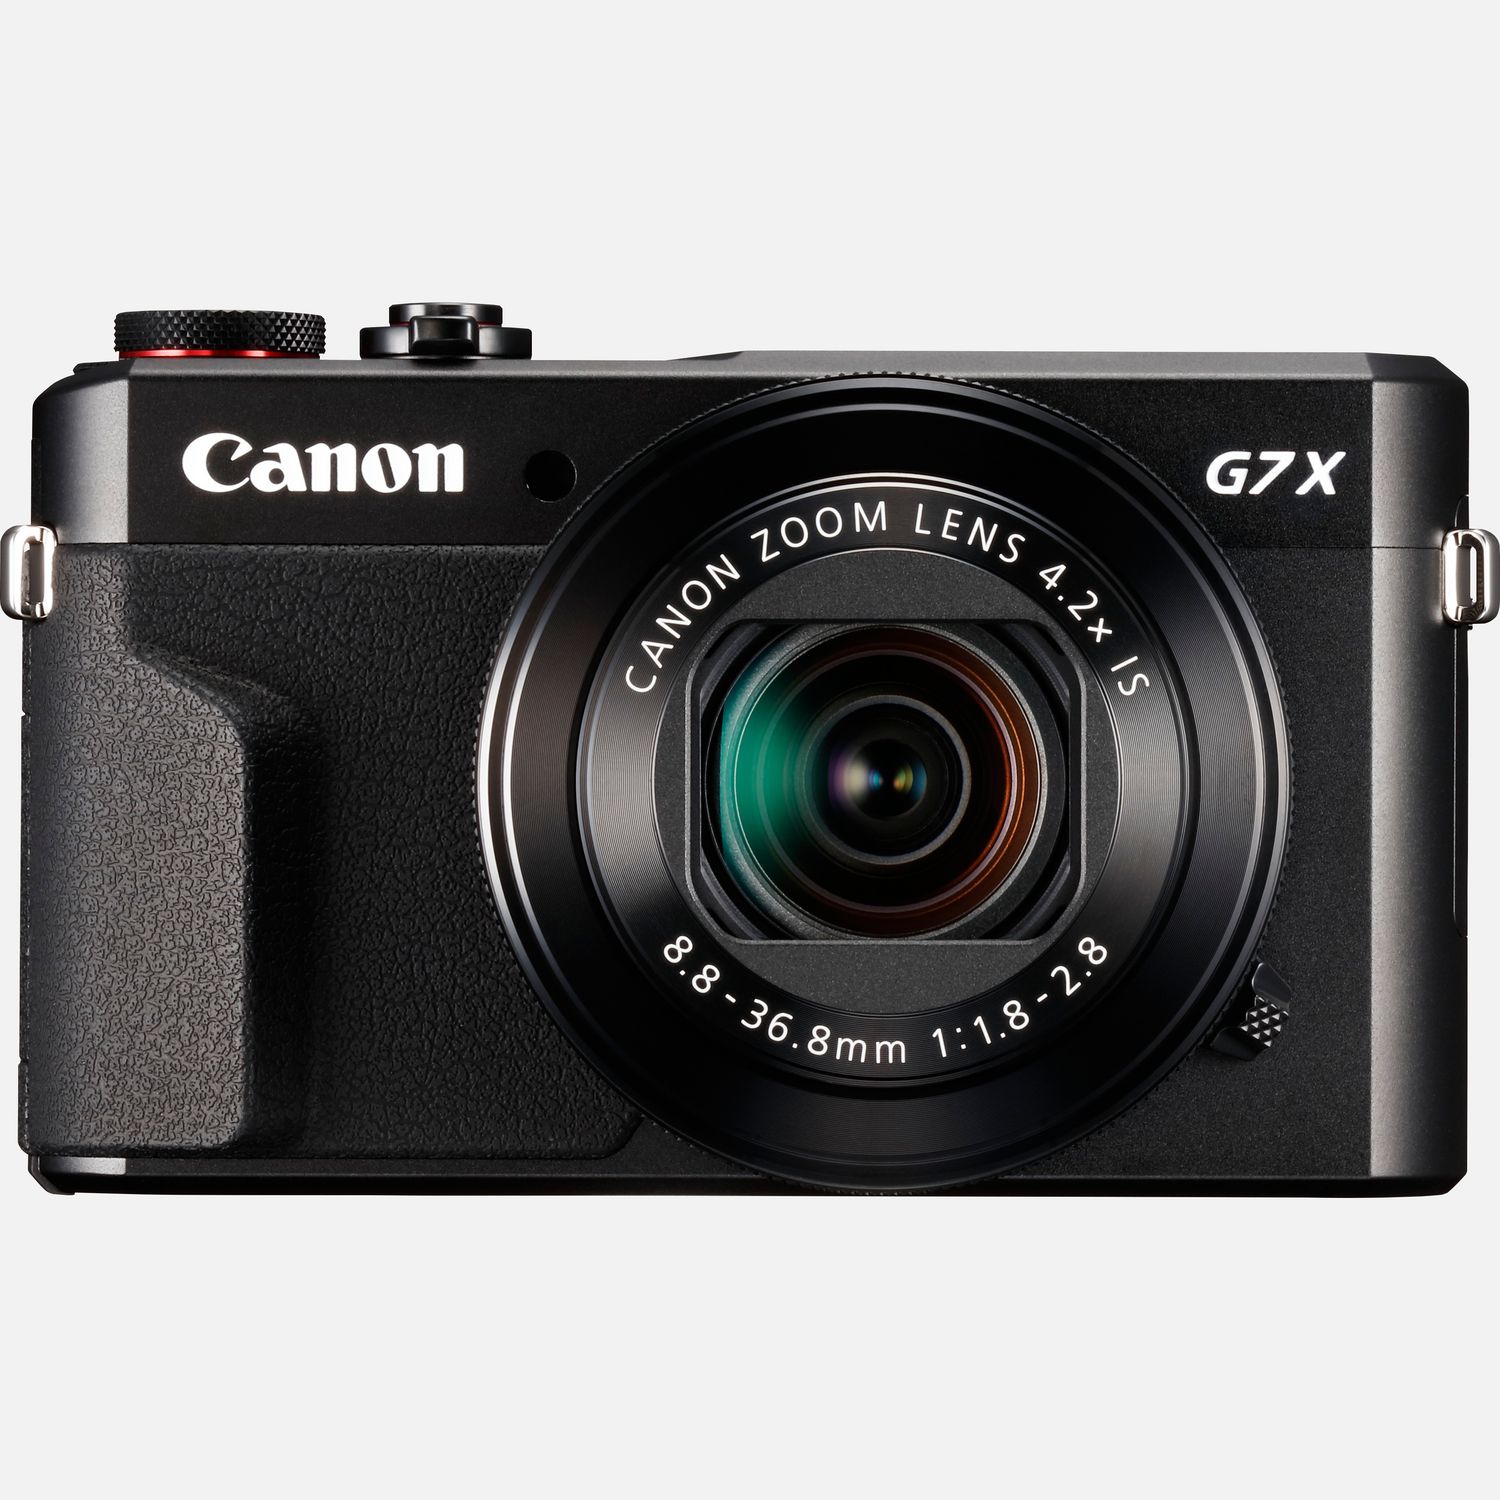 Canon PowerShot G7 X Mark II in Appareils photo wifi at Canon